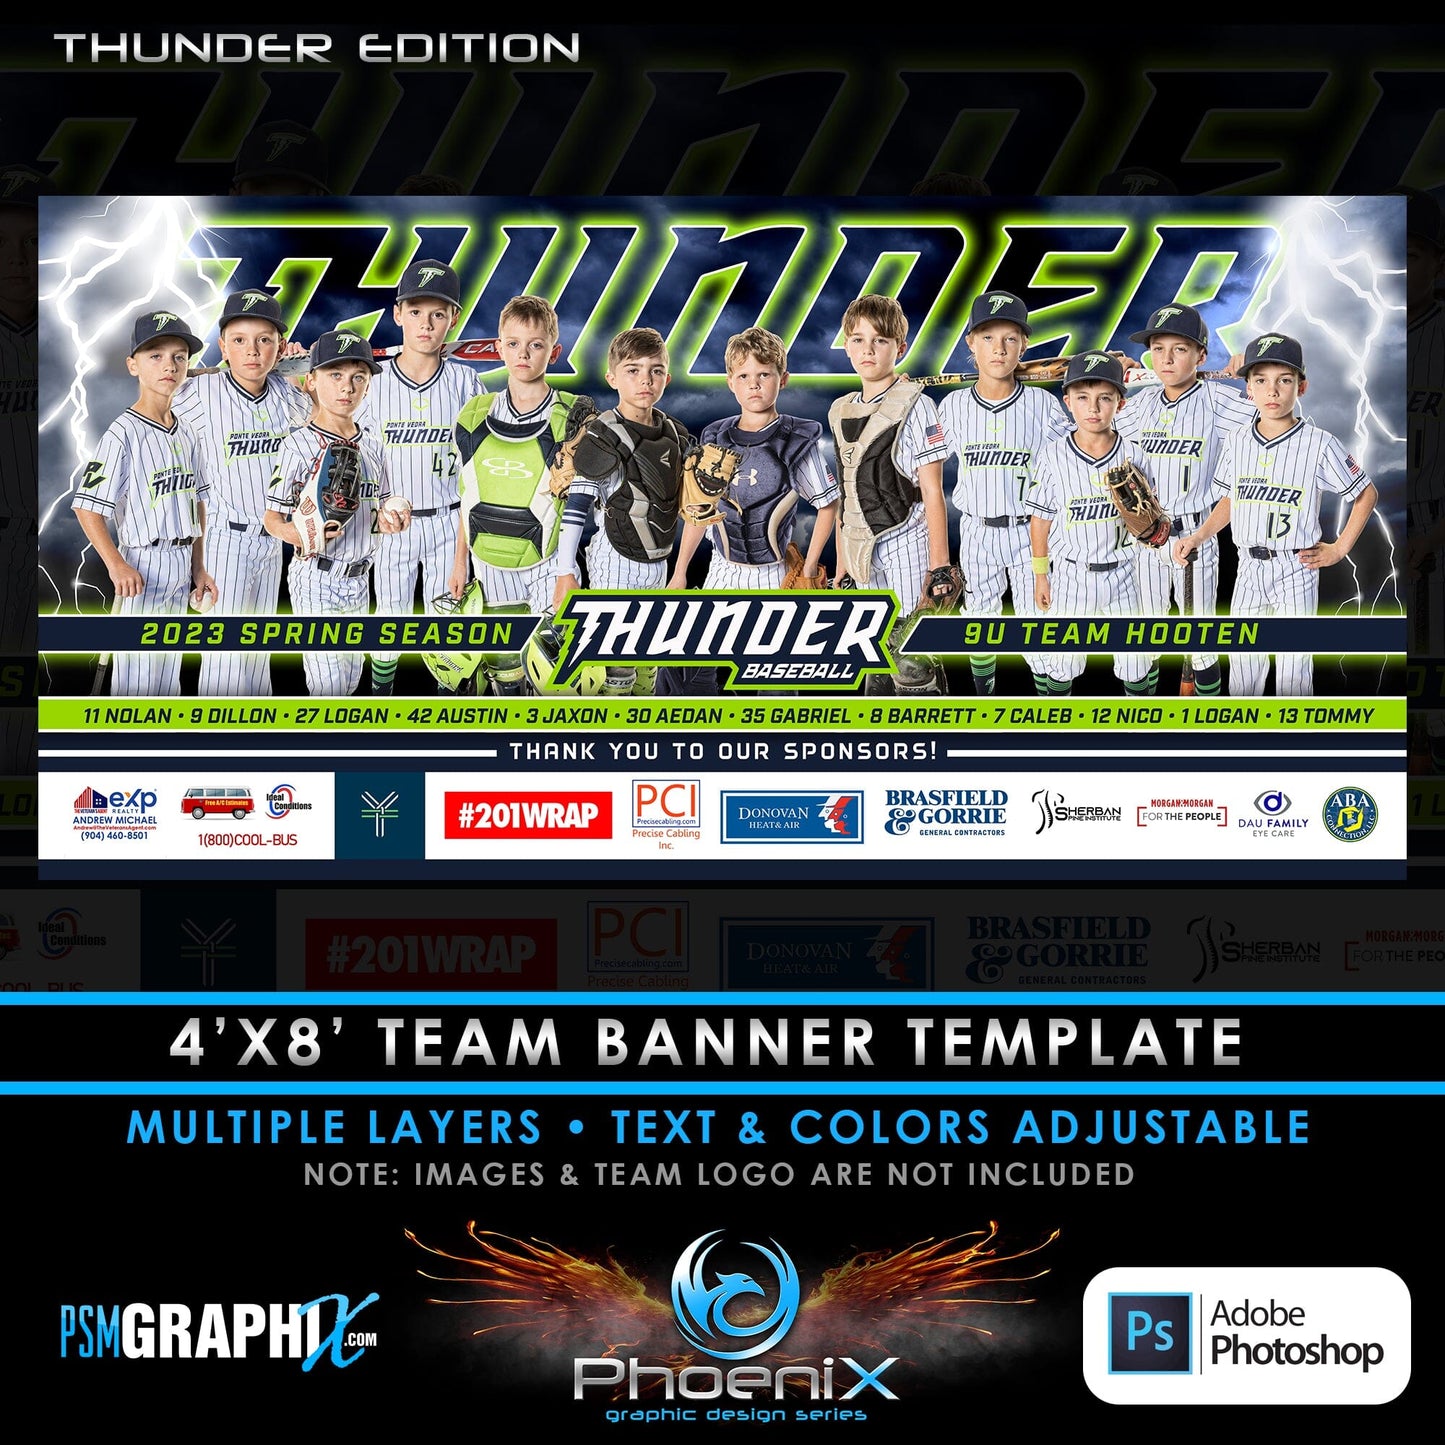 Thunder - Phoenix Series - Full Collection Bundle-Photoshop Template - PSMGraphix